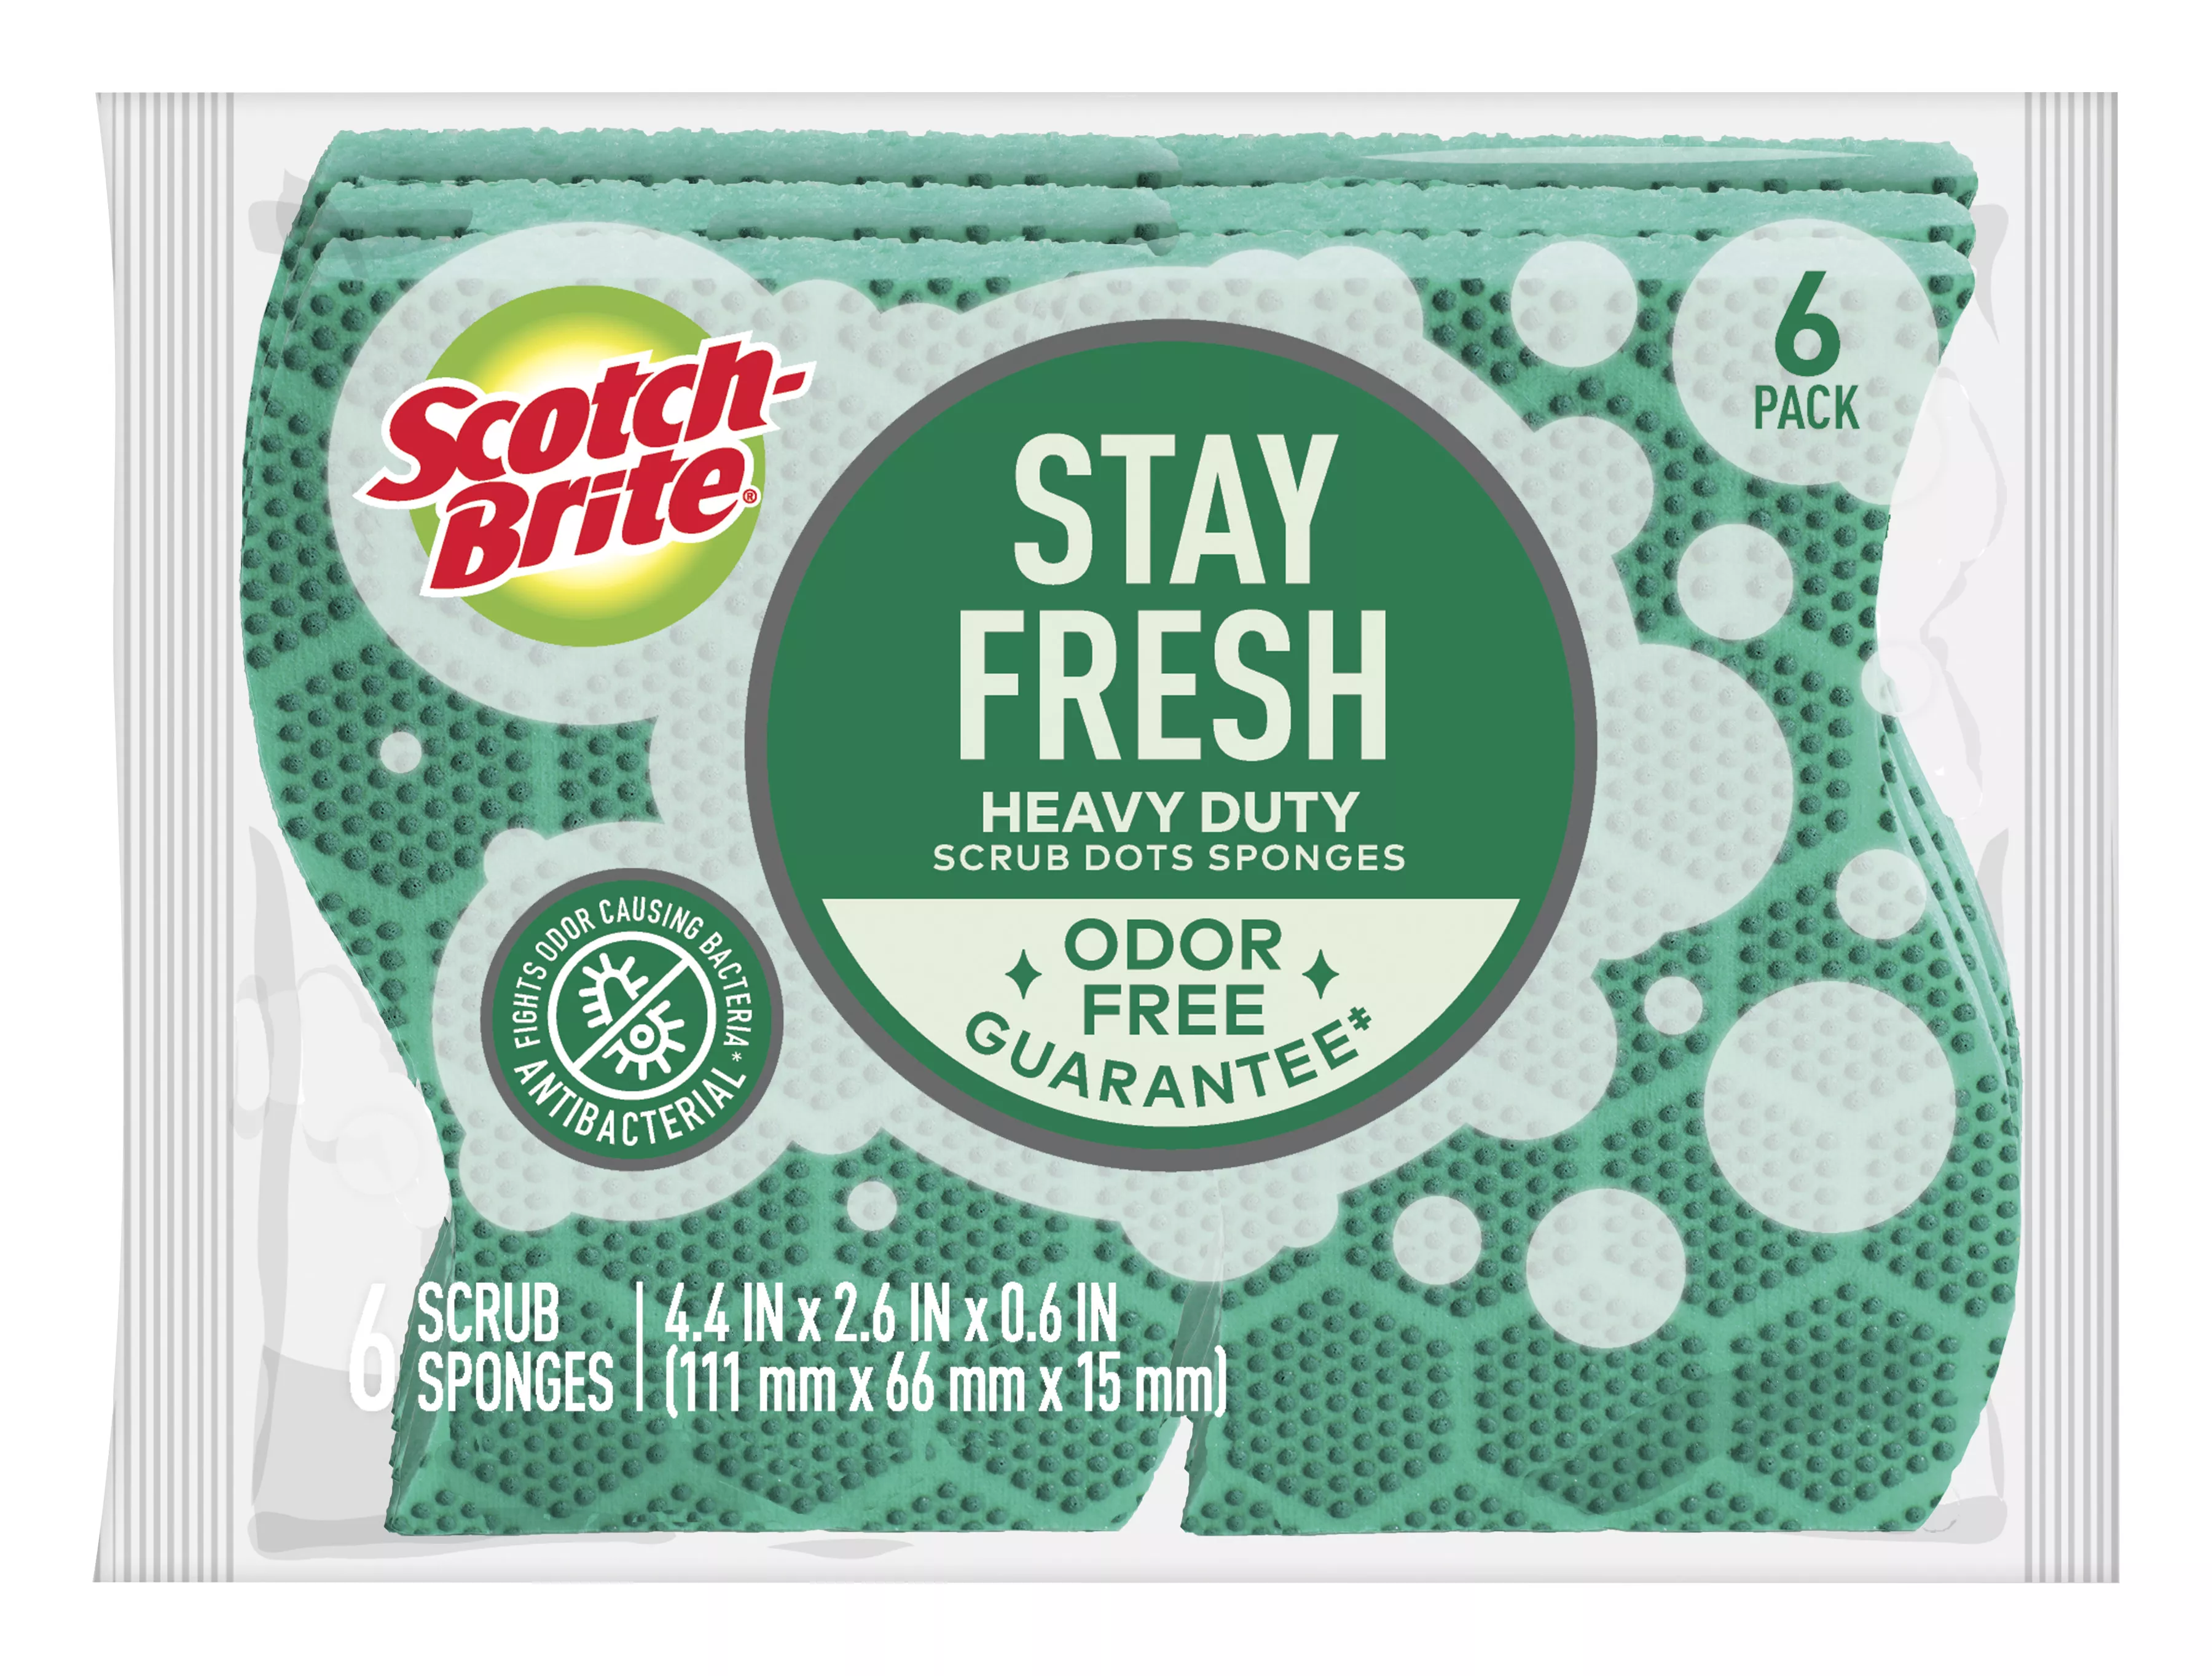 Scotch-Brite® Stay Fresh Heavy Duty Scrub Dots Sponge 30306-4, 4/6